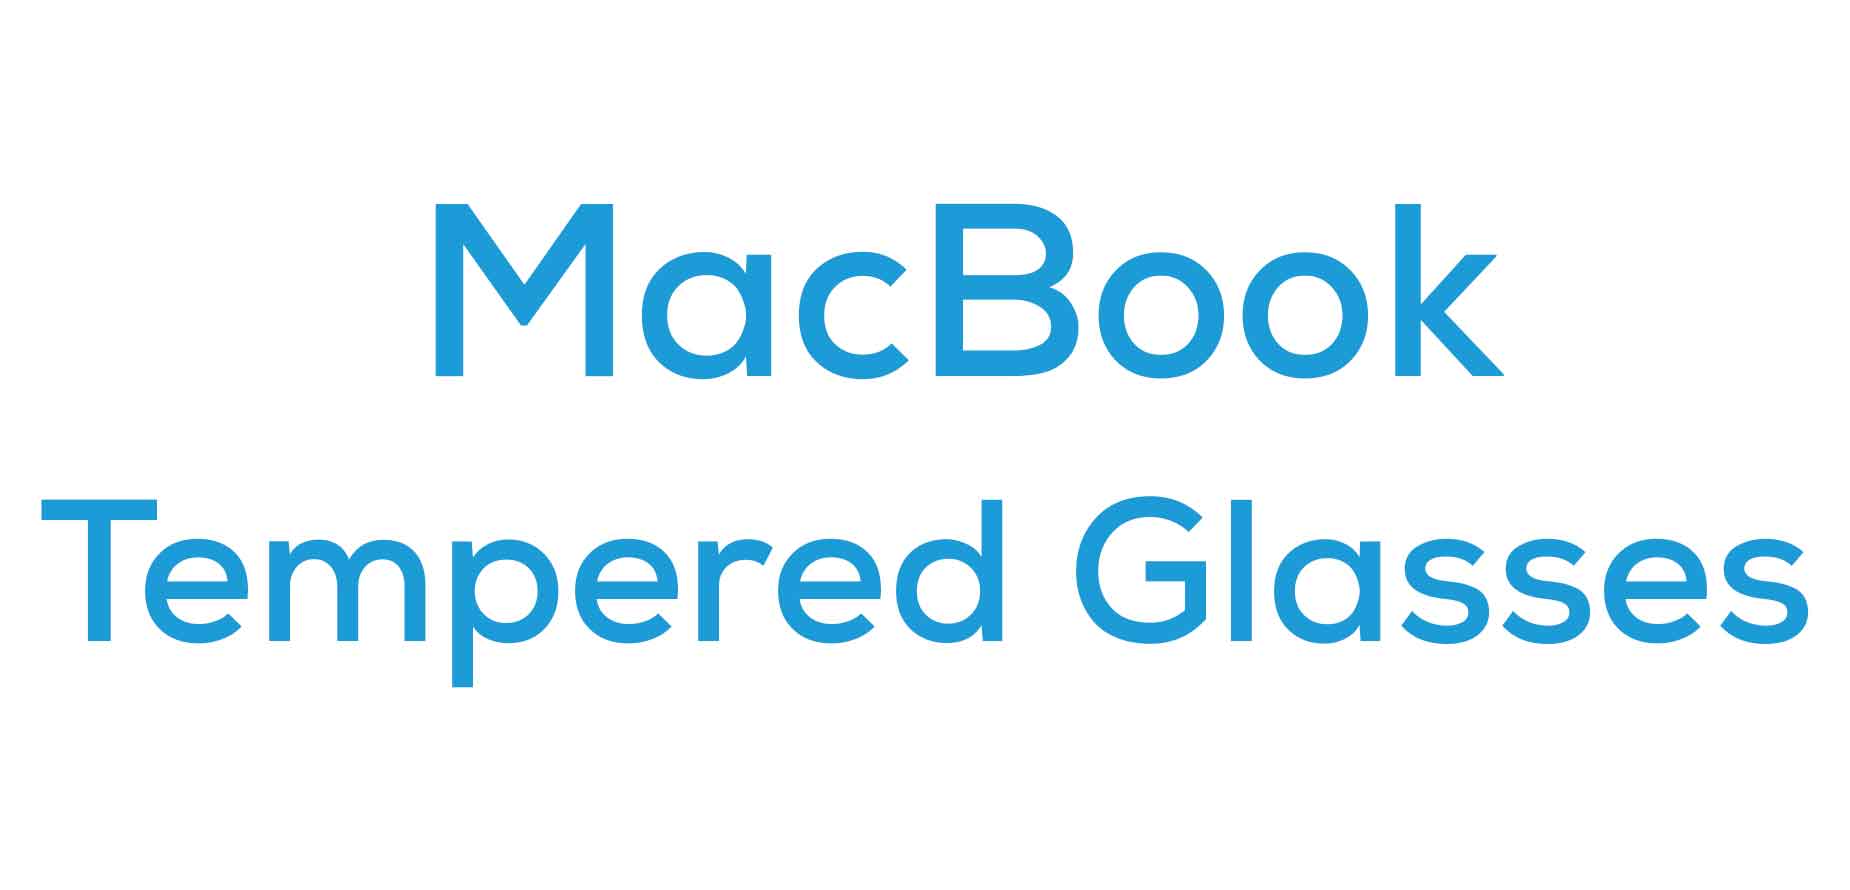 MacBook Tempered Glasses